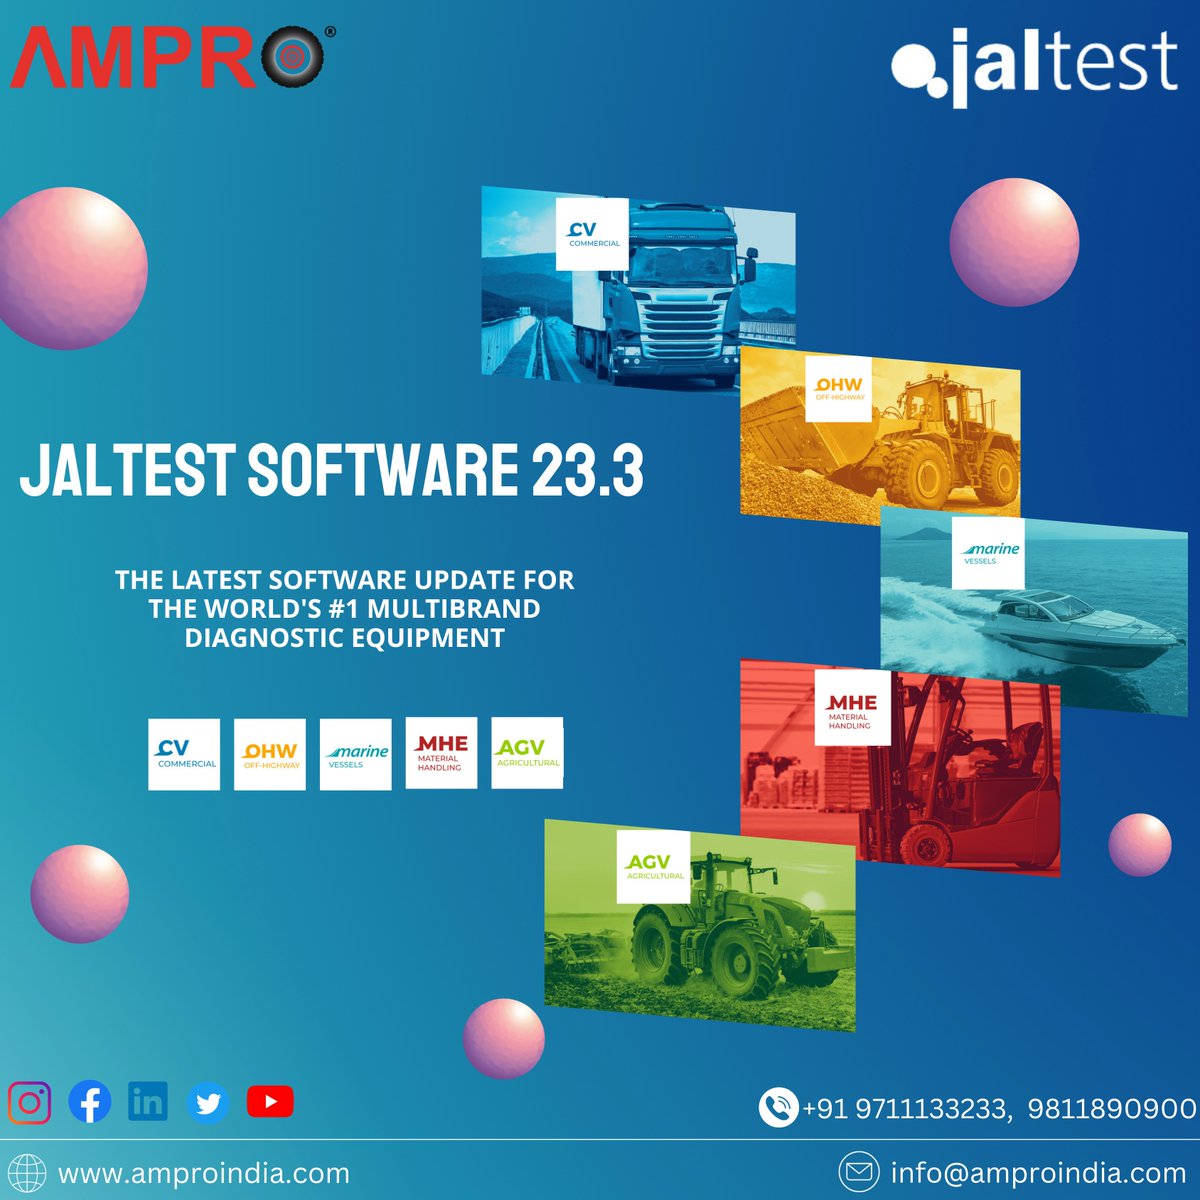 JALTEST SOFTWARE 23.3 Innovations!

Version 23.3 of the #JaltestDiagnostics software, the industry-leading multi-brand & multi-system diagnostics solution, is out now.